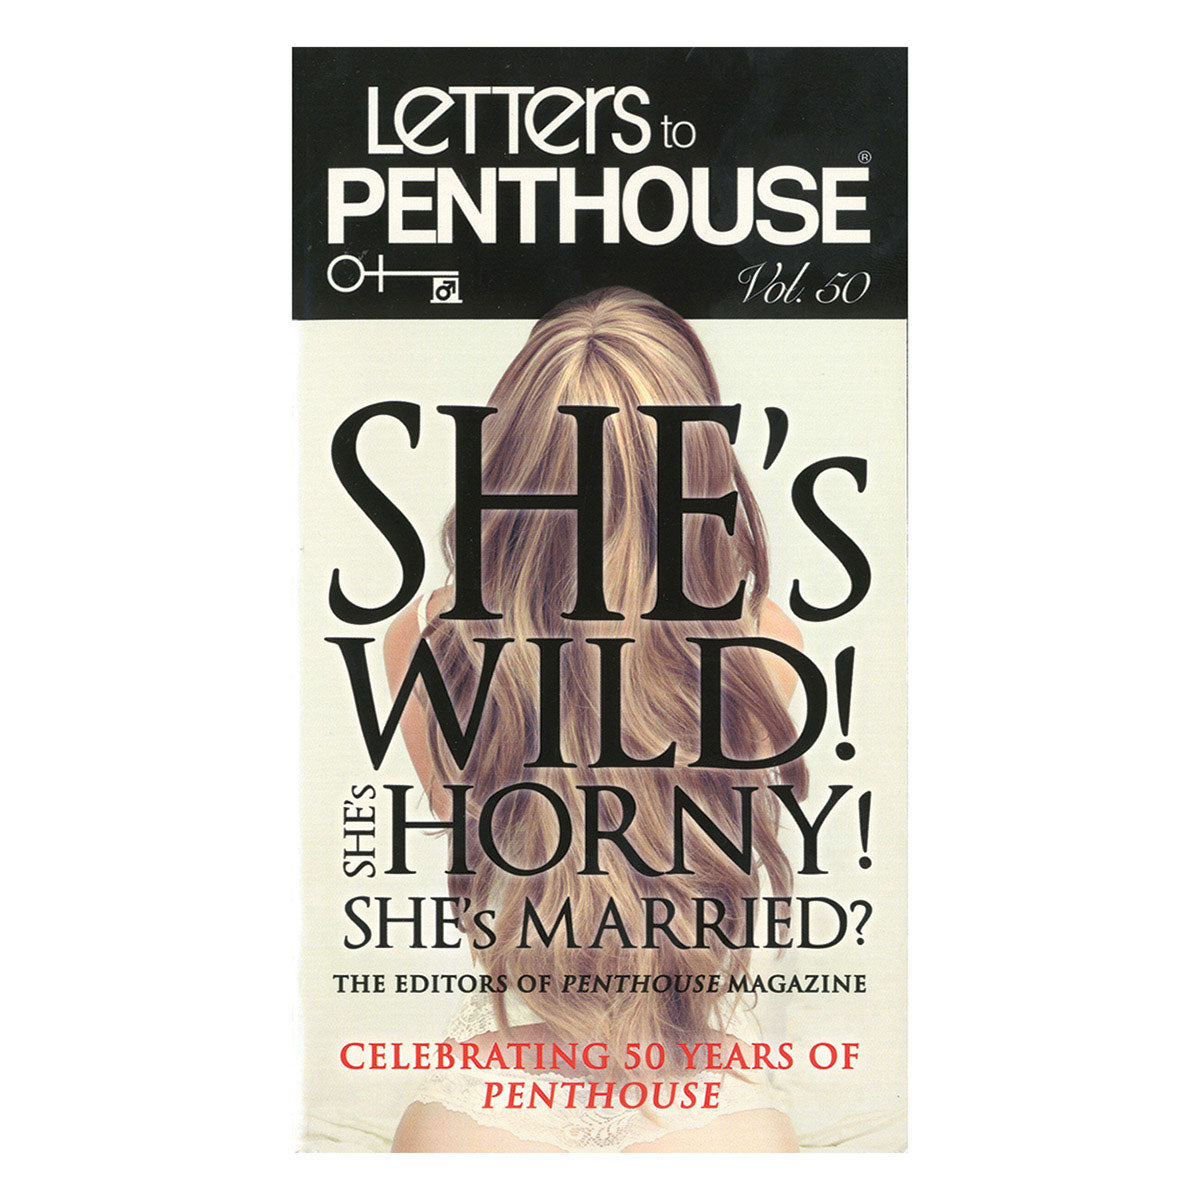 Letters to Penthouse XXXXX